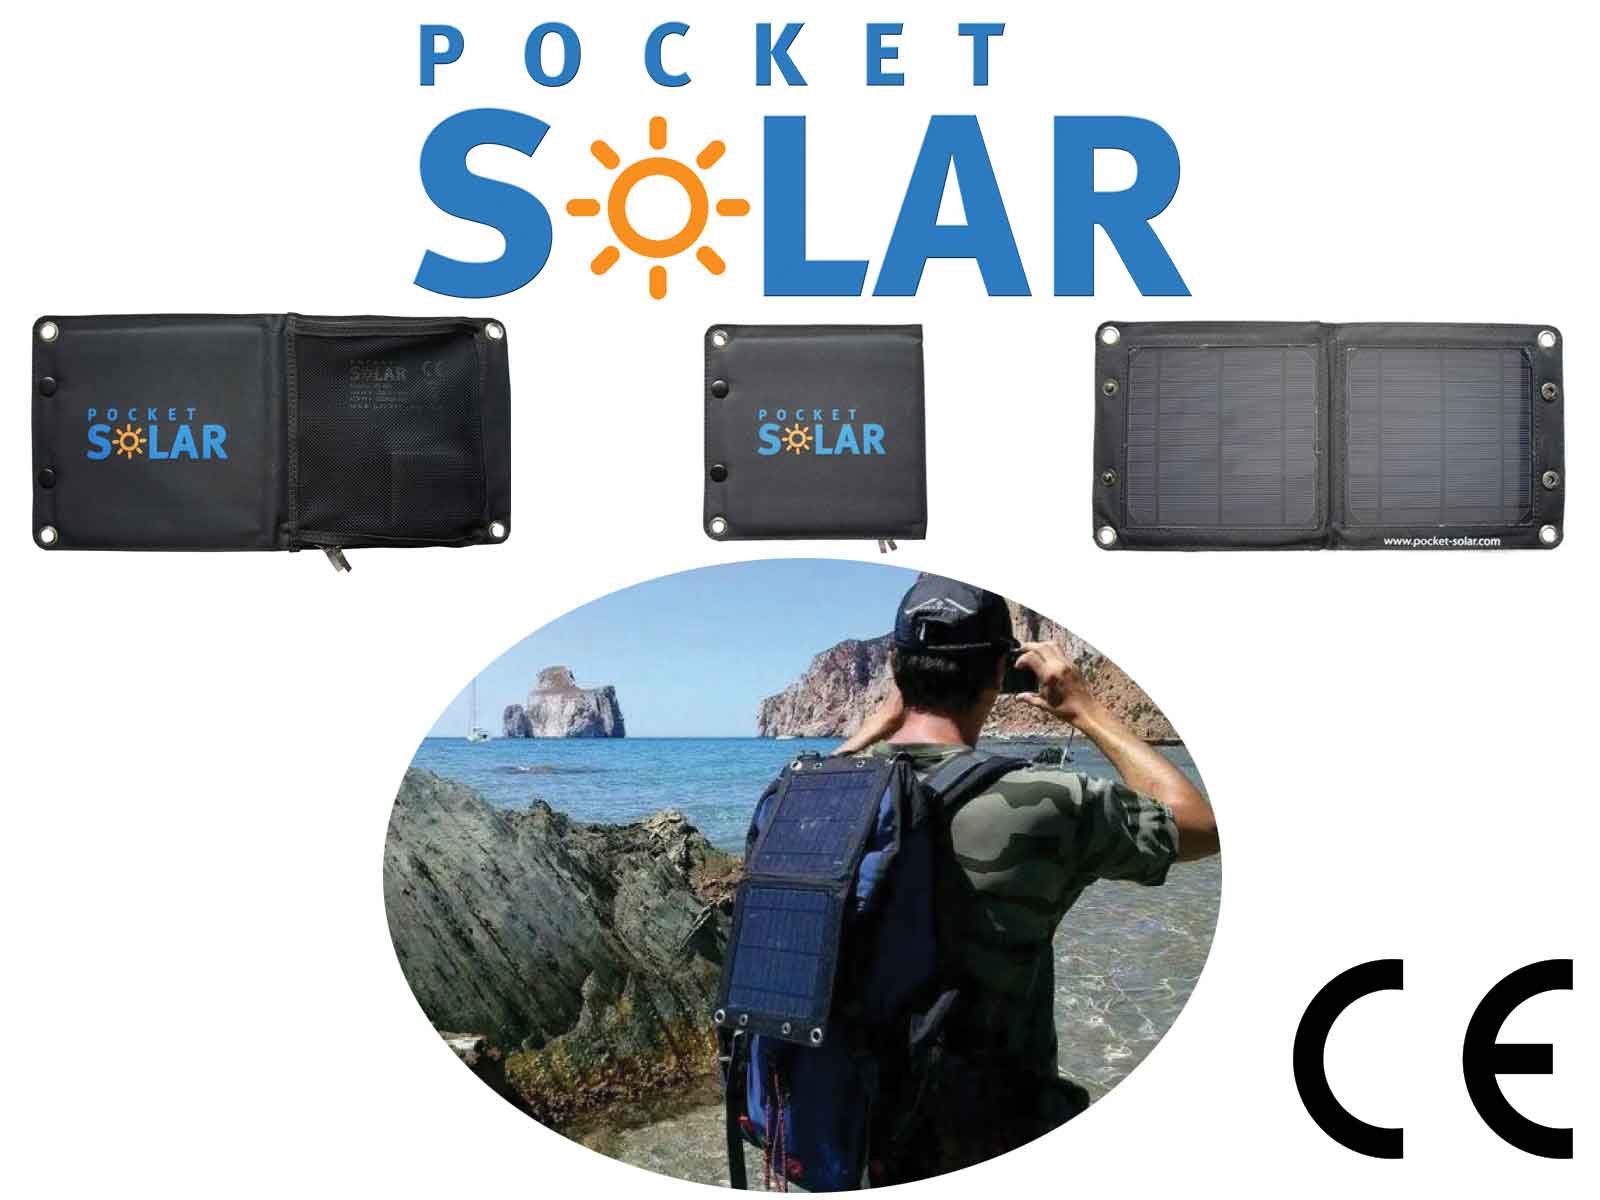 7w-pannello-solare-portatile-alto-rendimento-viaggio-mare-tenda-camping-trekking-pocket-solar-portable-solar-panel-charger-smartphone-tablet-0.jpg